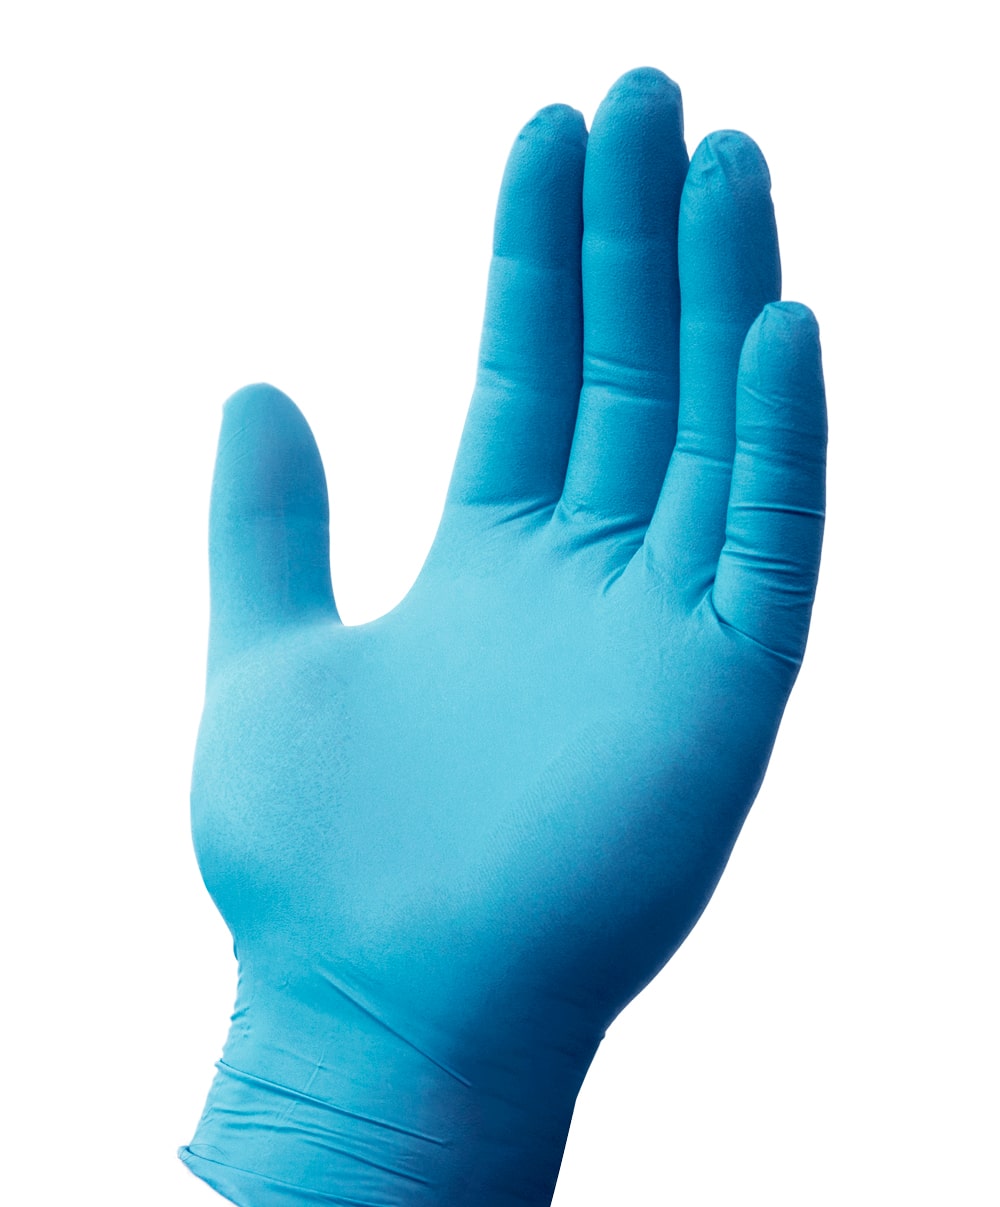 GNPR-XL-1A N2204 3Mil 
Light-Weight Blue Powder Free 
Nitrile Glove 100/Bx 10Bx/Cs